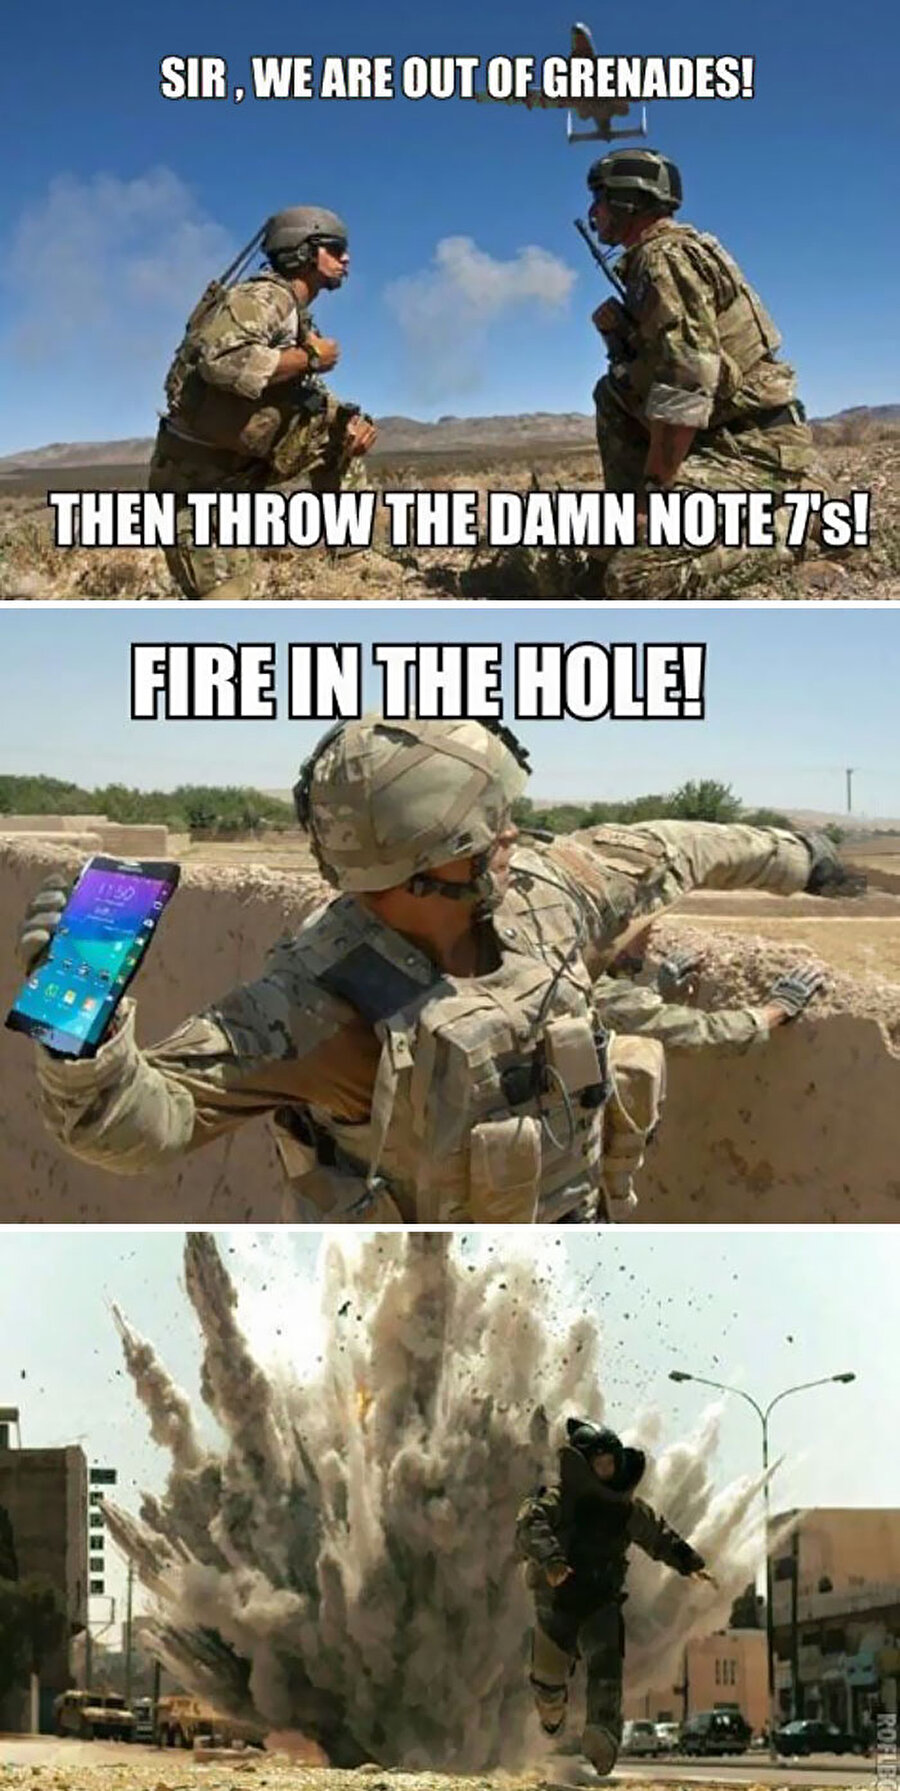 Askeri envantere Note 7'yi de ekleyelim, iyi fikir. 

                                    
                                